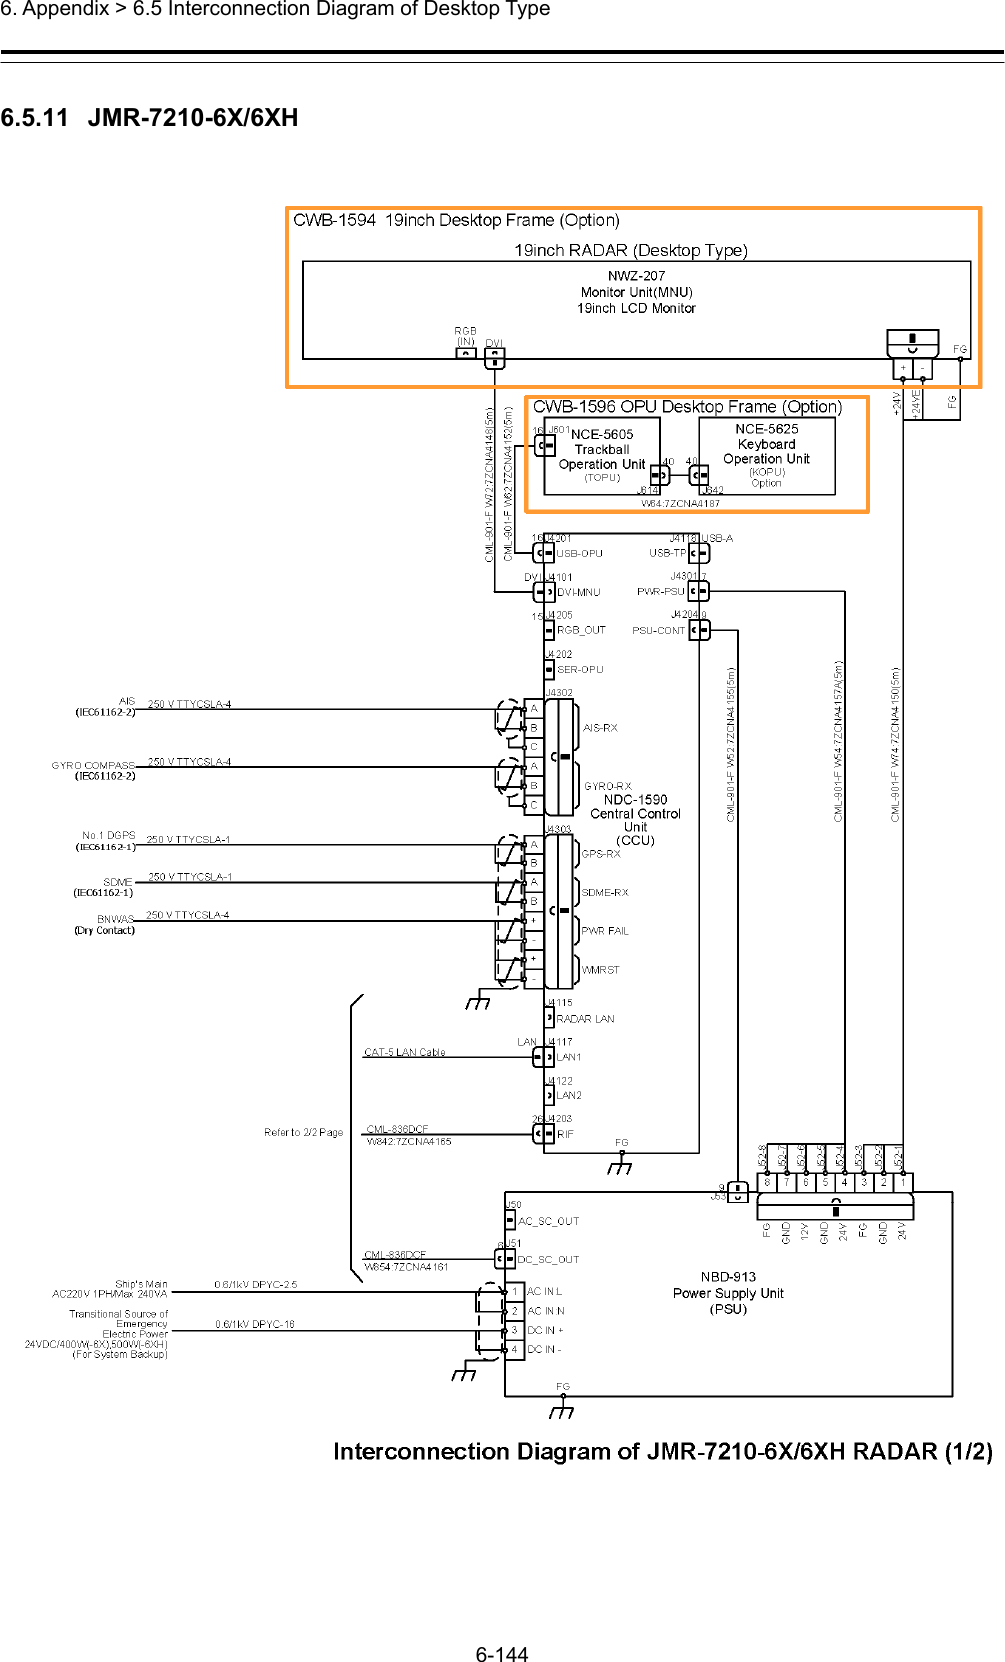  6. Appendix &gt; 6.5 Interconnection Diagram of Desktop Type 6-144  6.5.11  JMR-7210-6X/6XH  